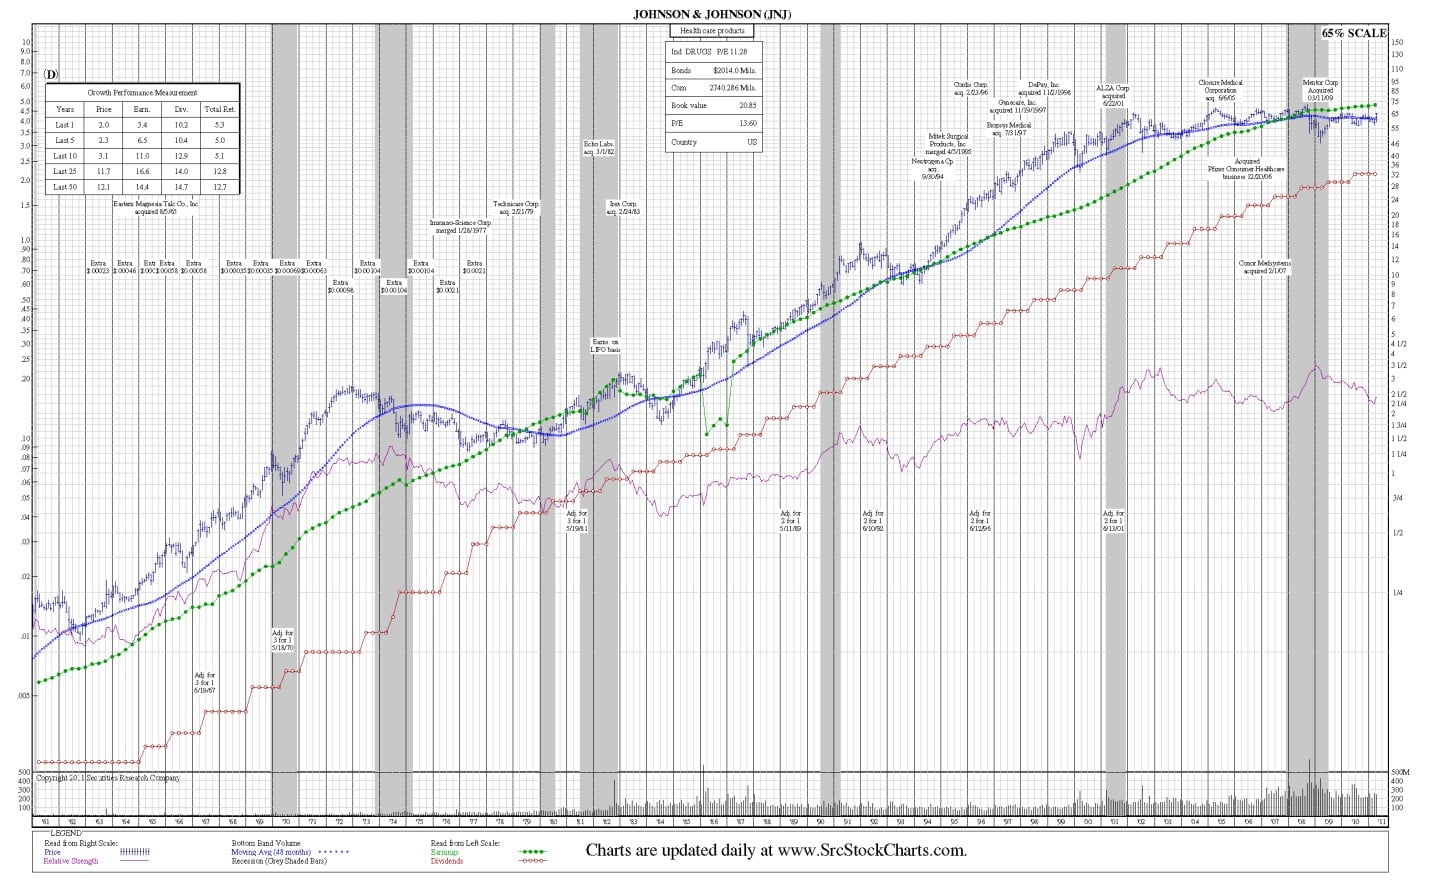 read stockcharts jnj 50 year chart